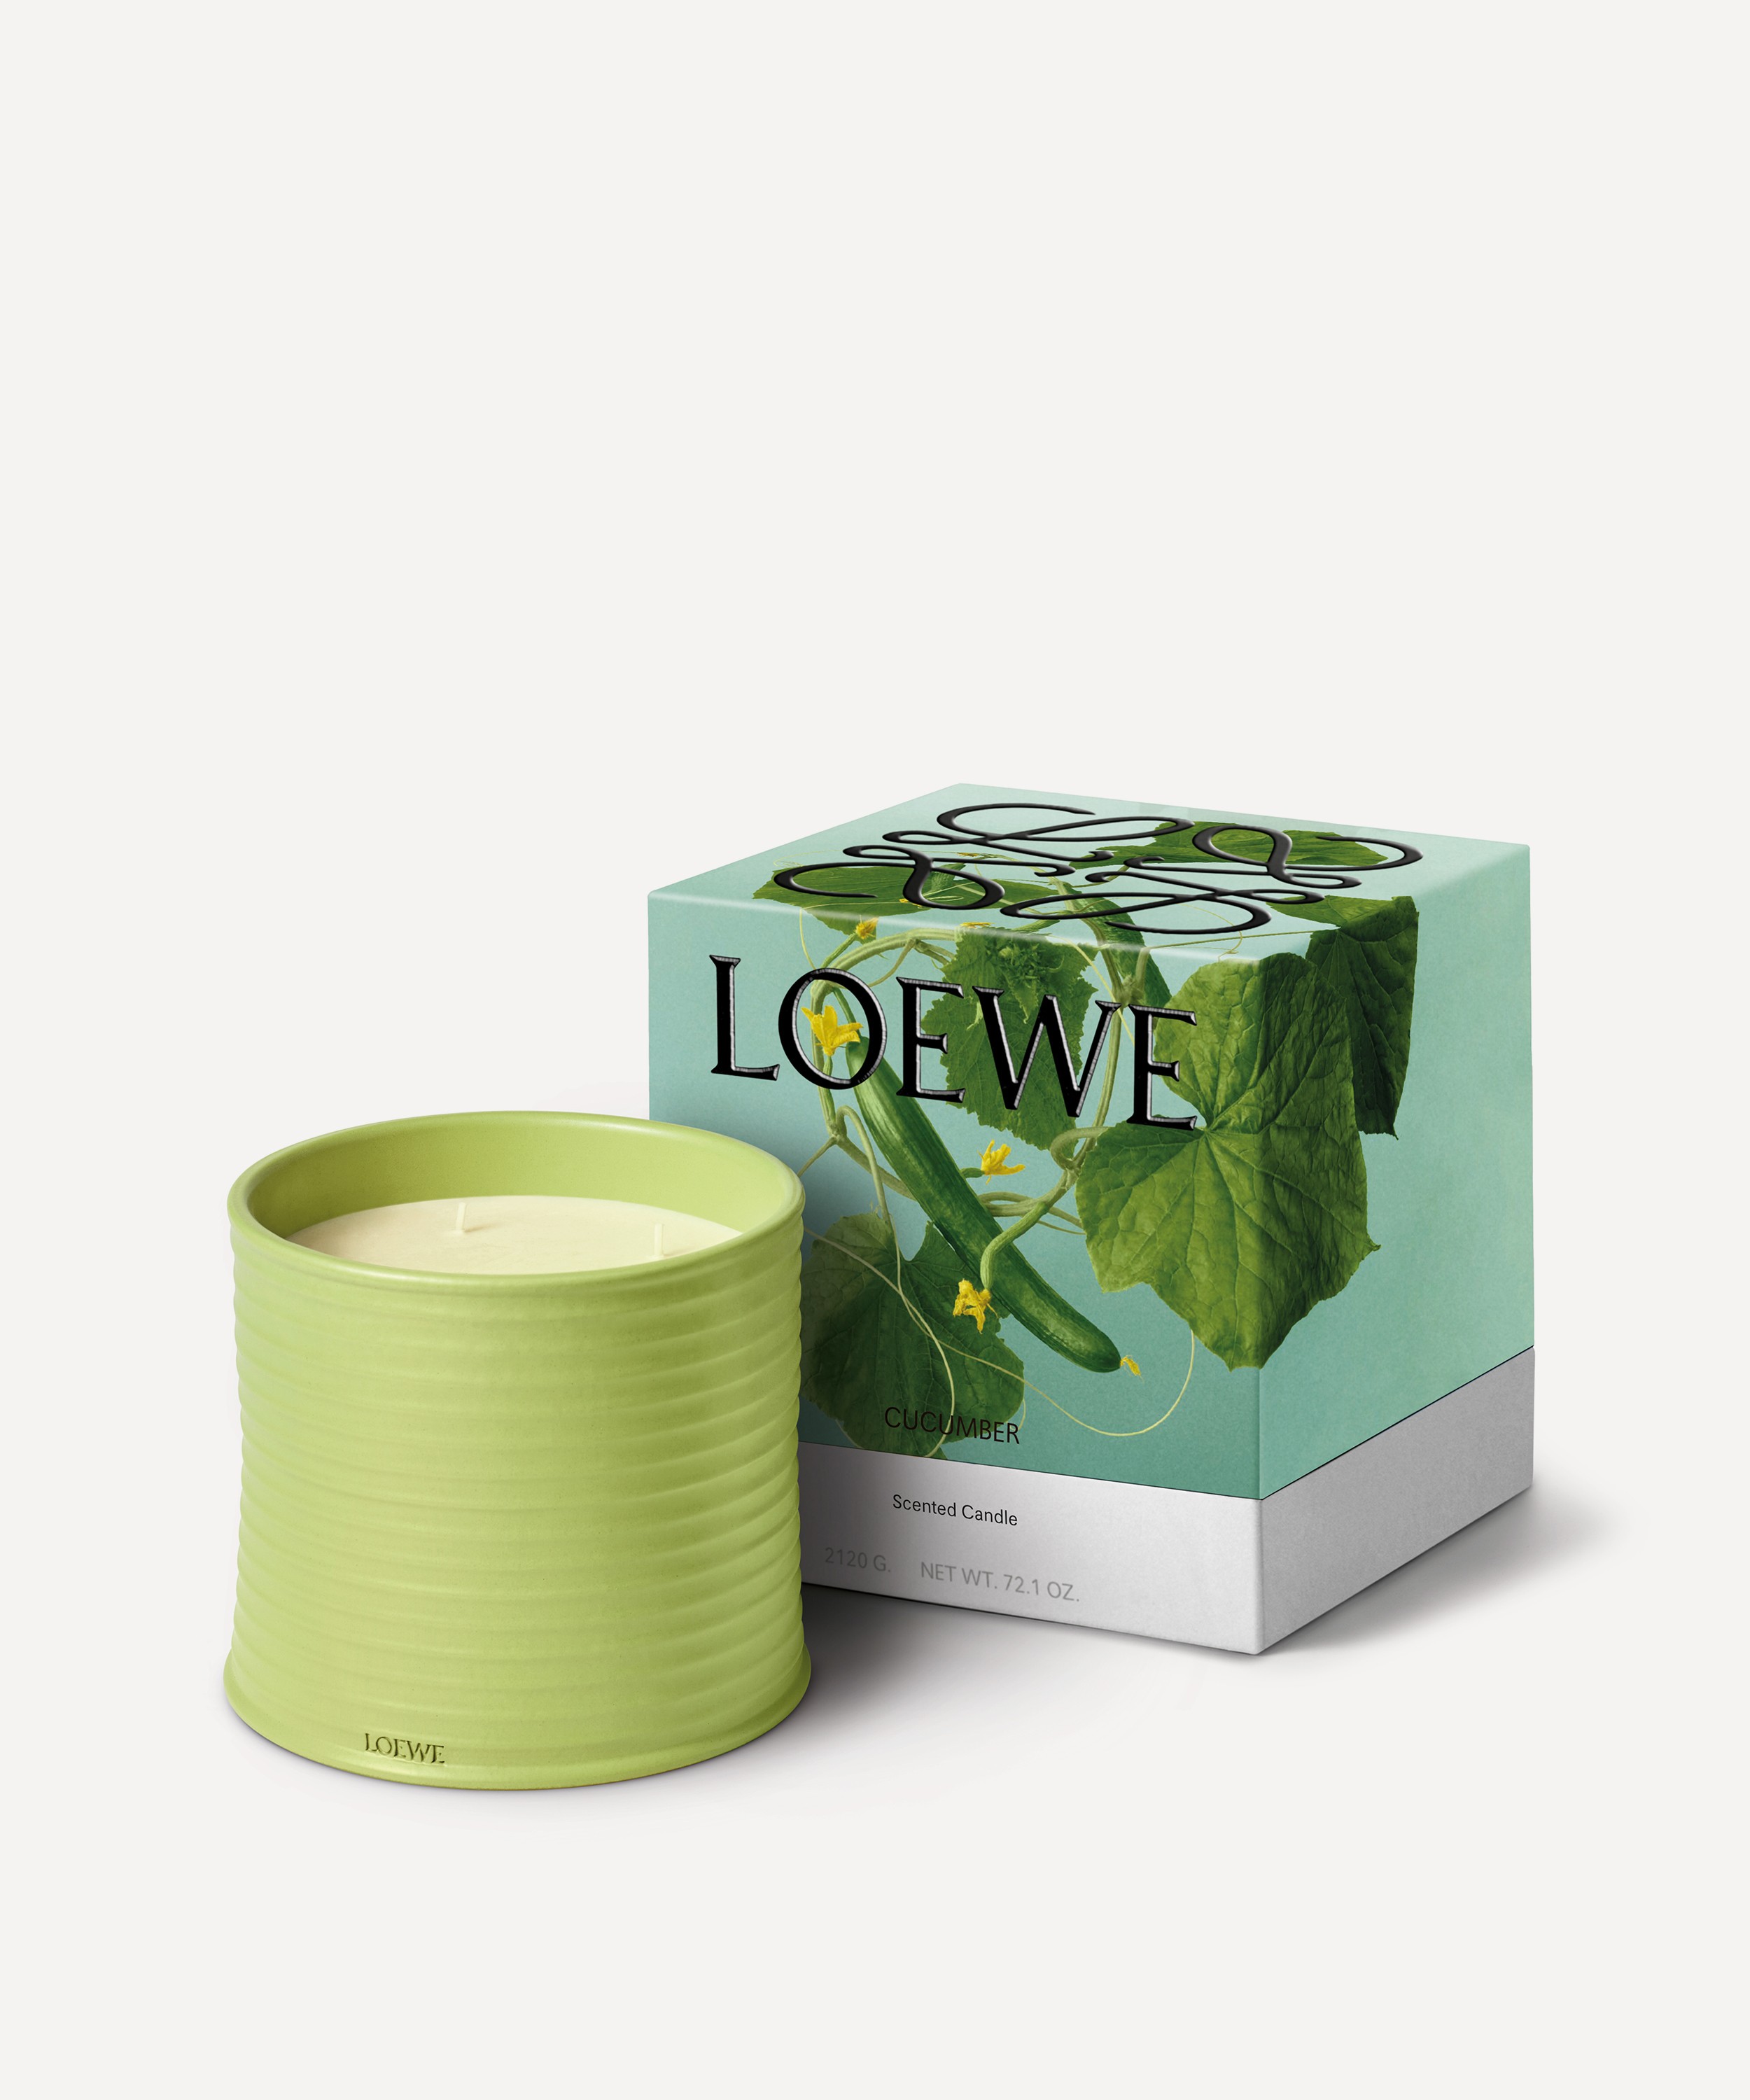 Loewe - Large Cucumber Candle 2120g image number 1